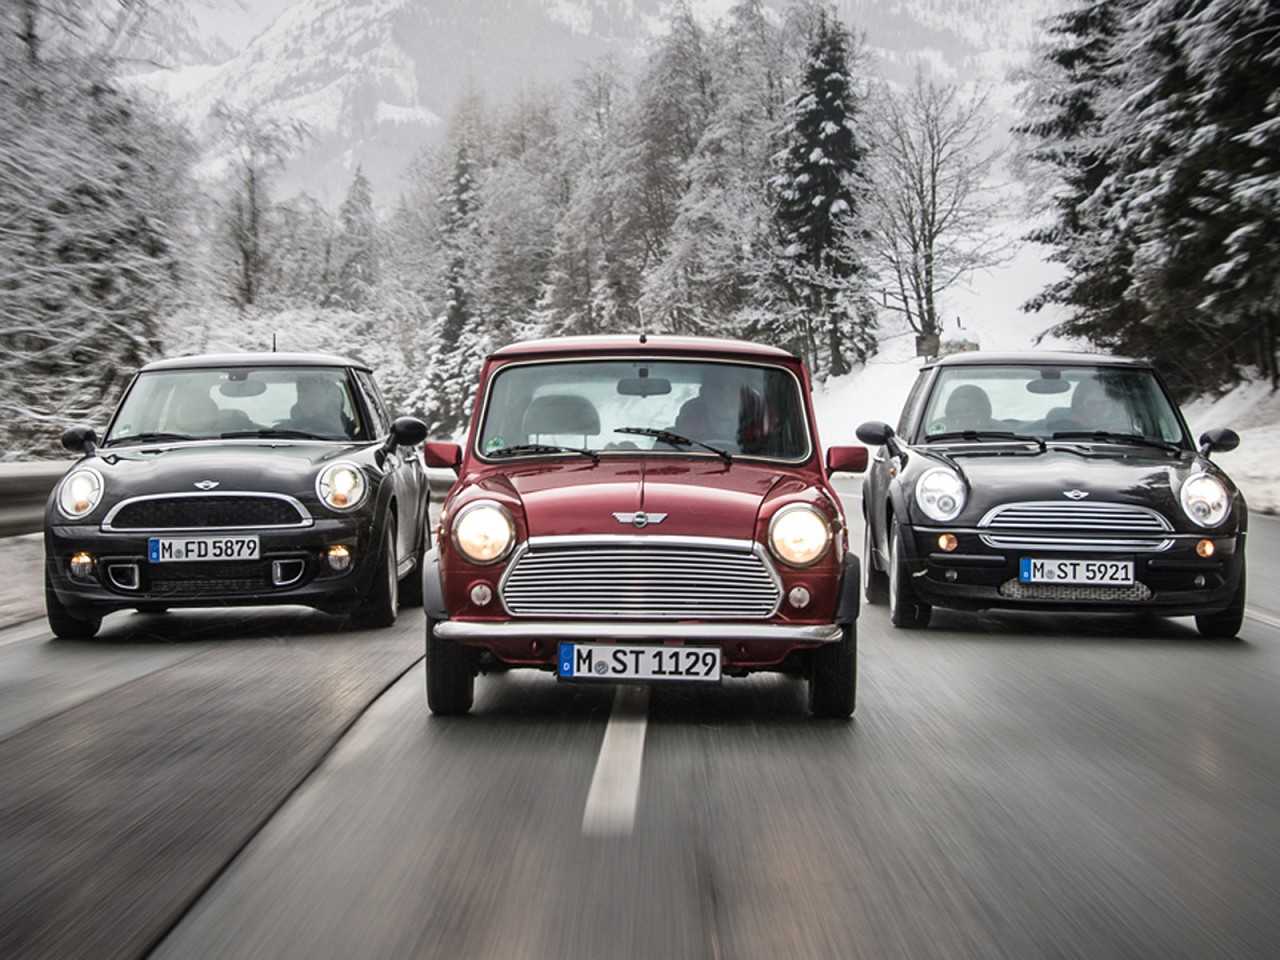 Mini Cooper old vs New. Mini Cooper old. Mini Cooper old and New. Популярные машины в Швейцарии мини Купер. Old vs new